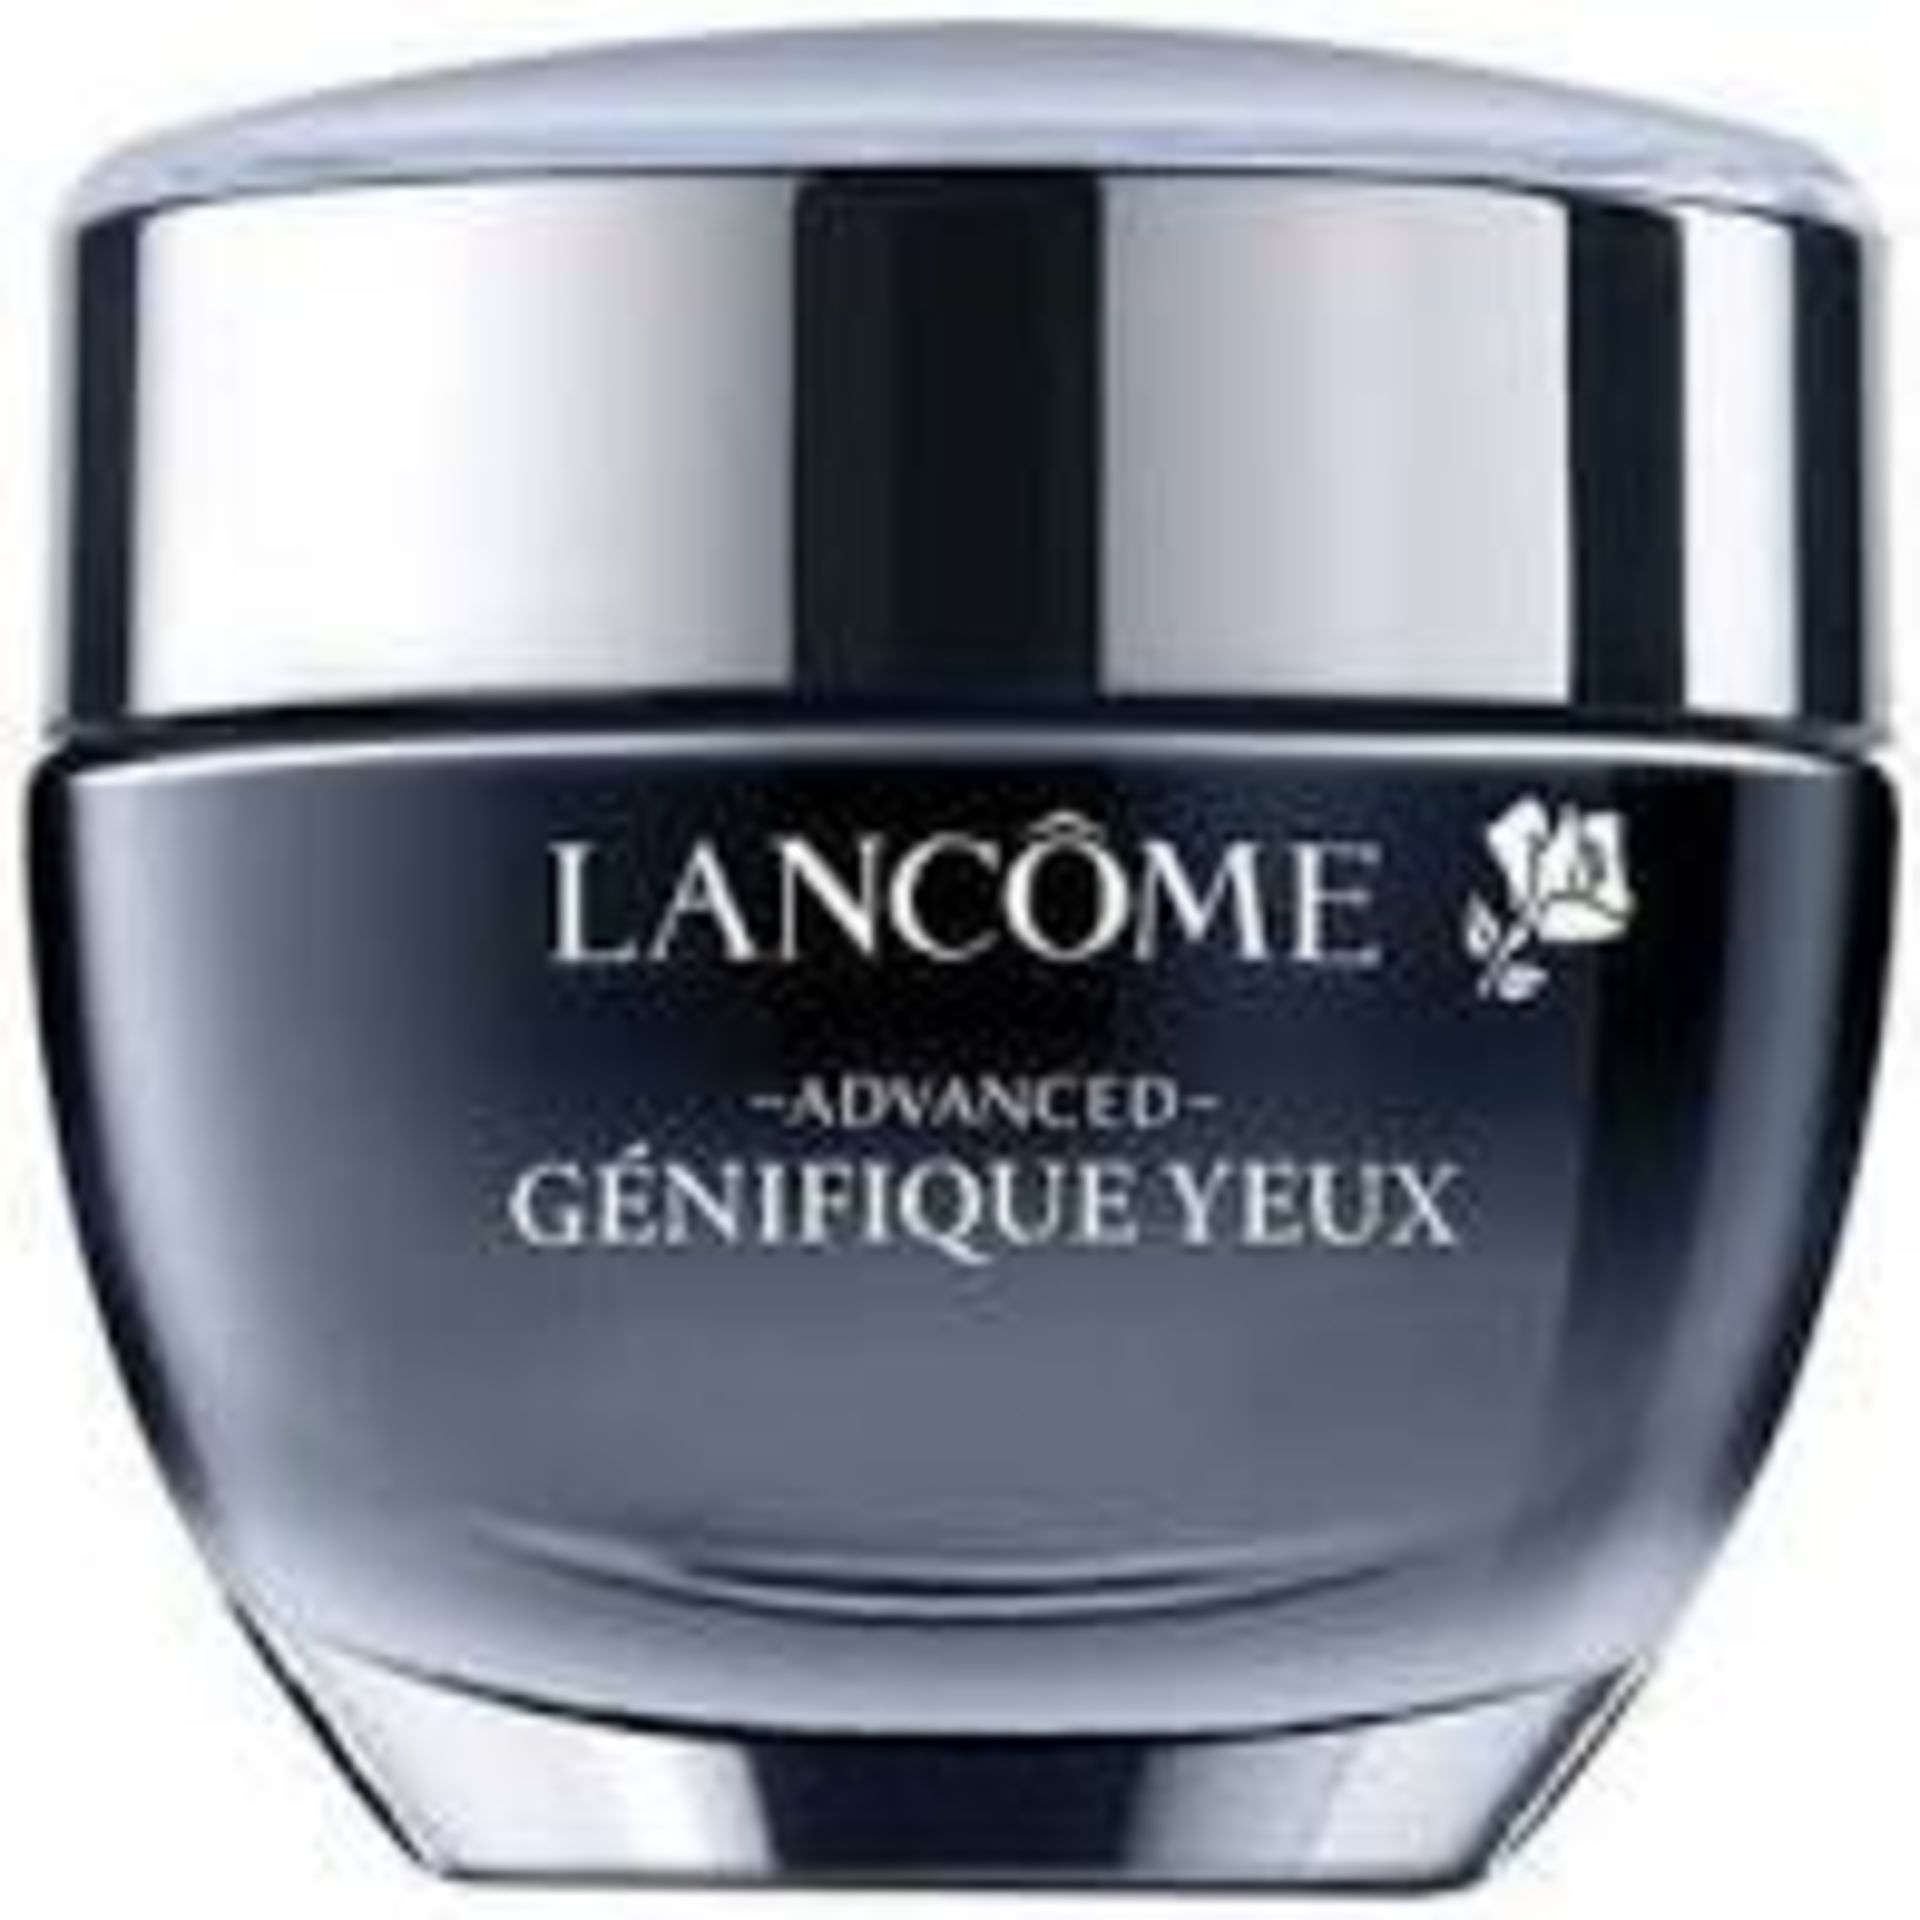 RRP £49 Lamcome Genifique Yeux 15ml Eye Cream